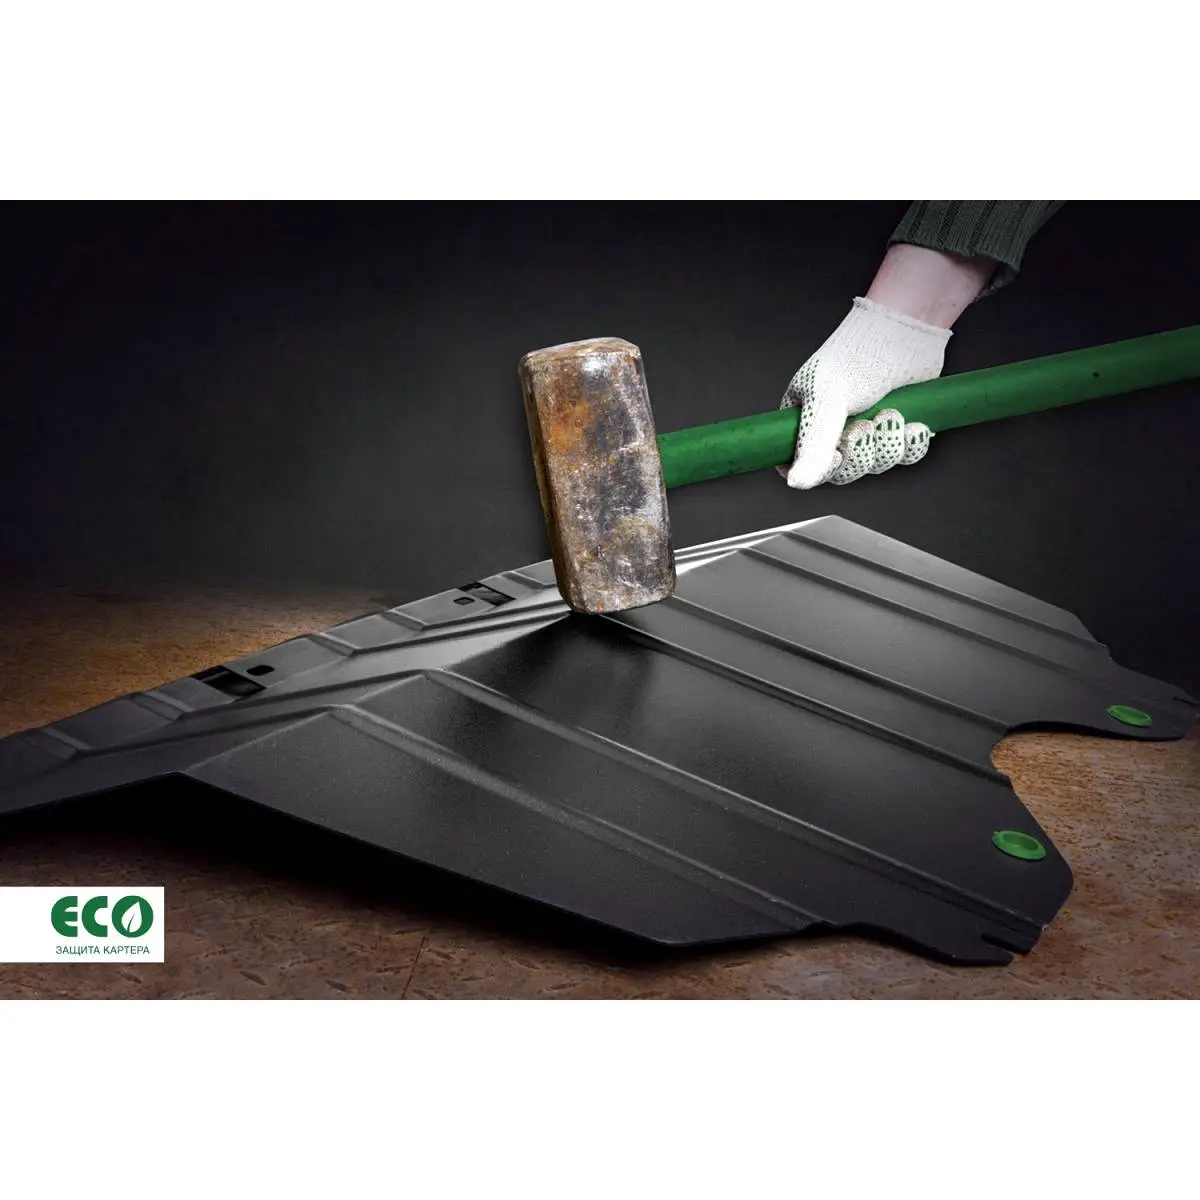 Комплект защиты картера и крепеж Eco VLXLZB0 eco4833020 1437099118 W6H920 7 изображение 5